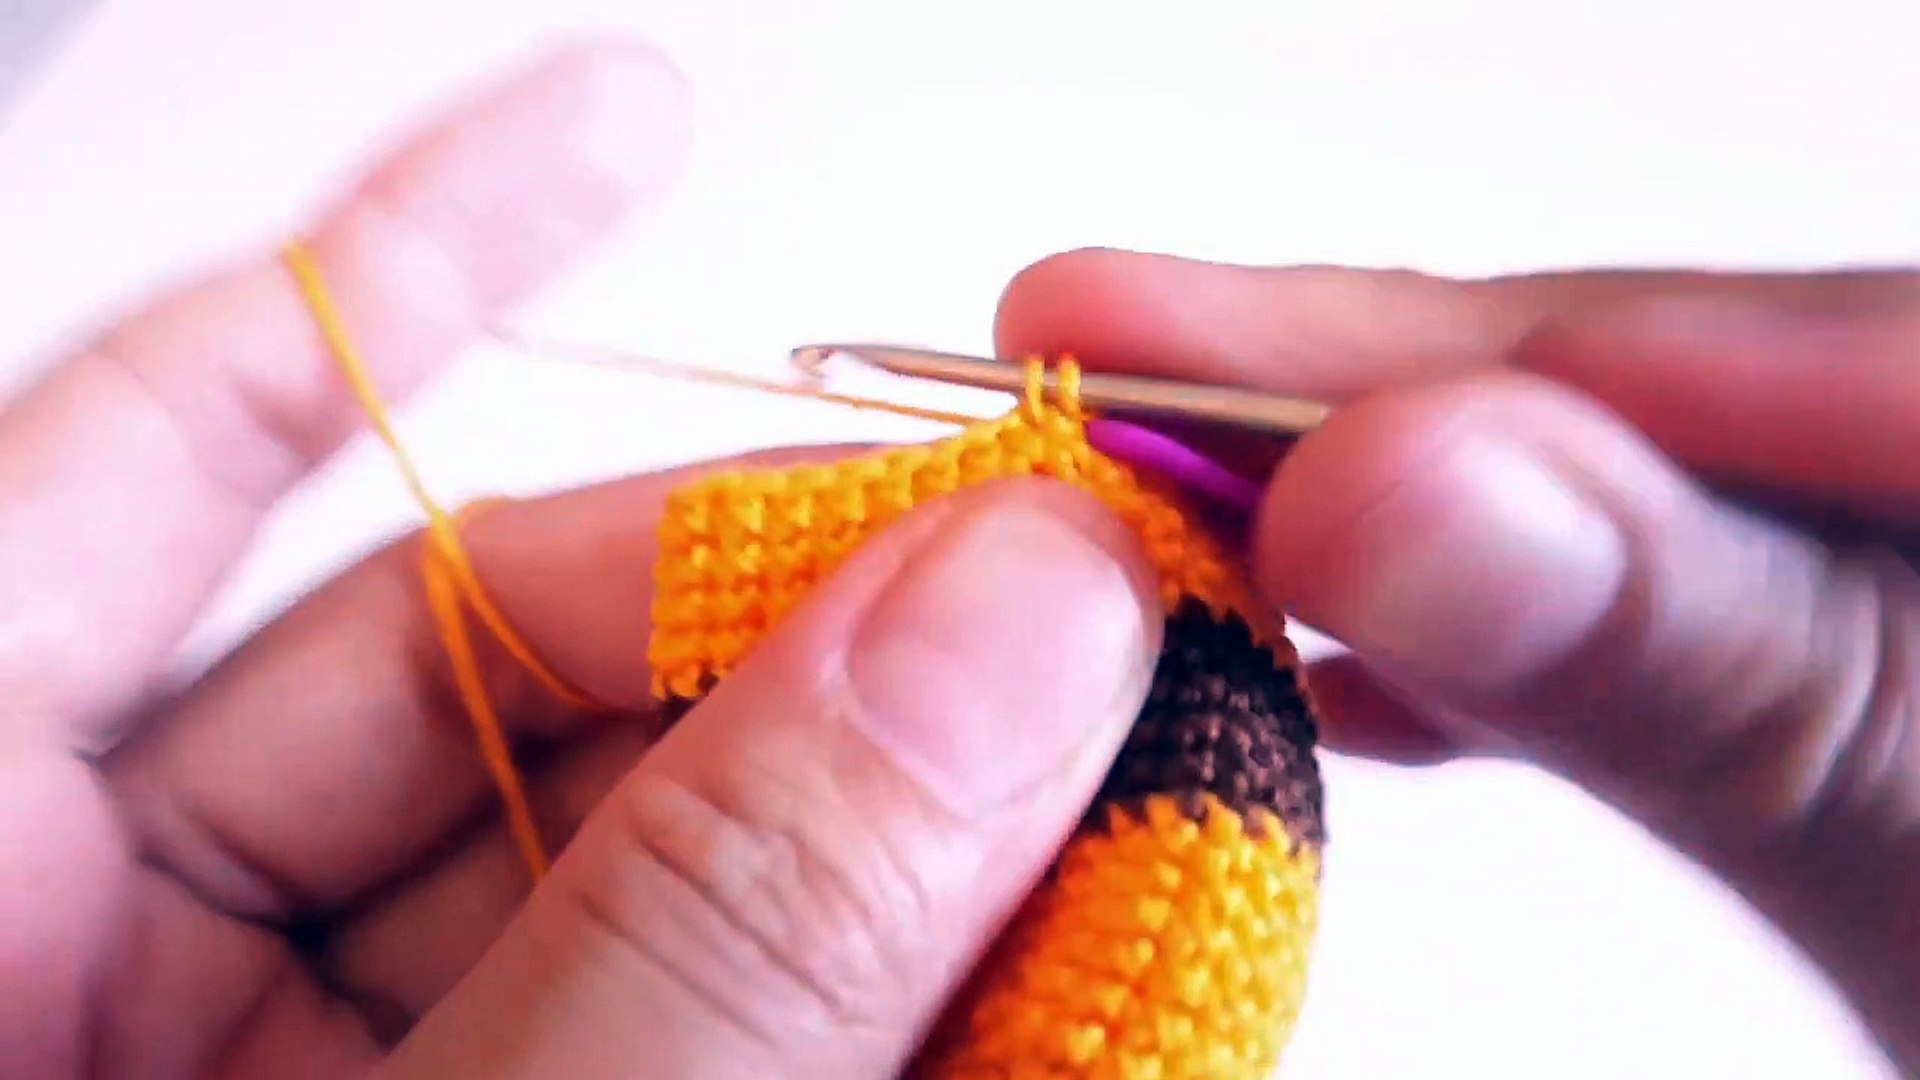 Amigurumi crochet doll CAL-crochet along-Part 1 